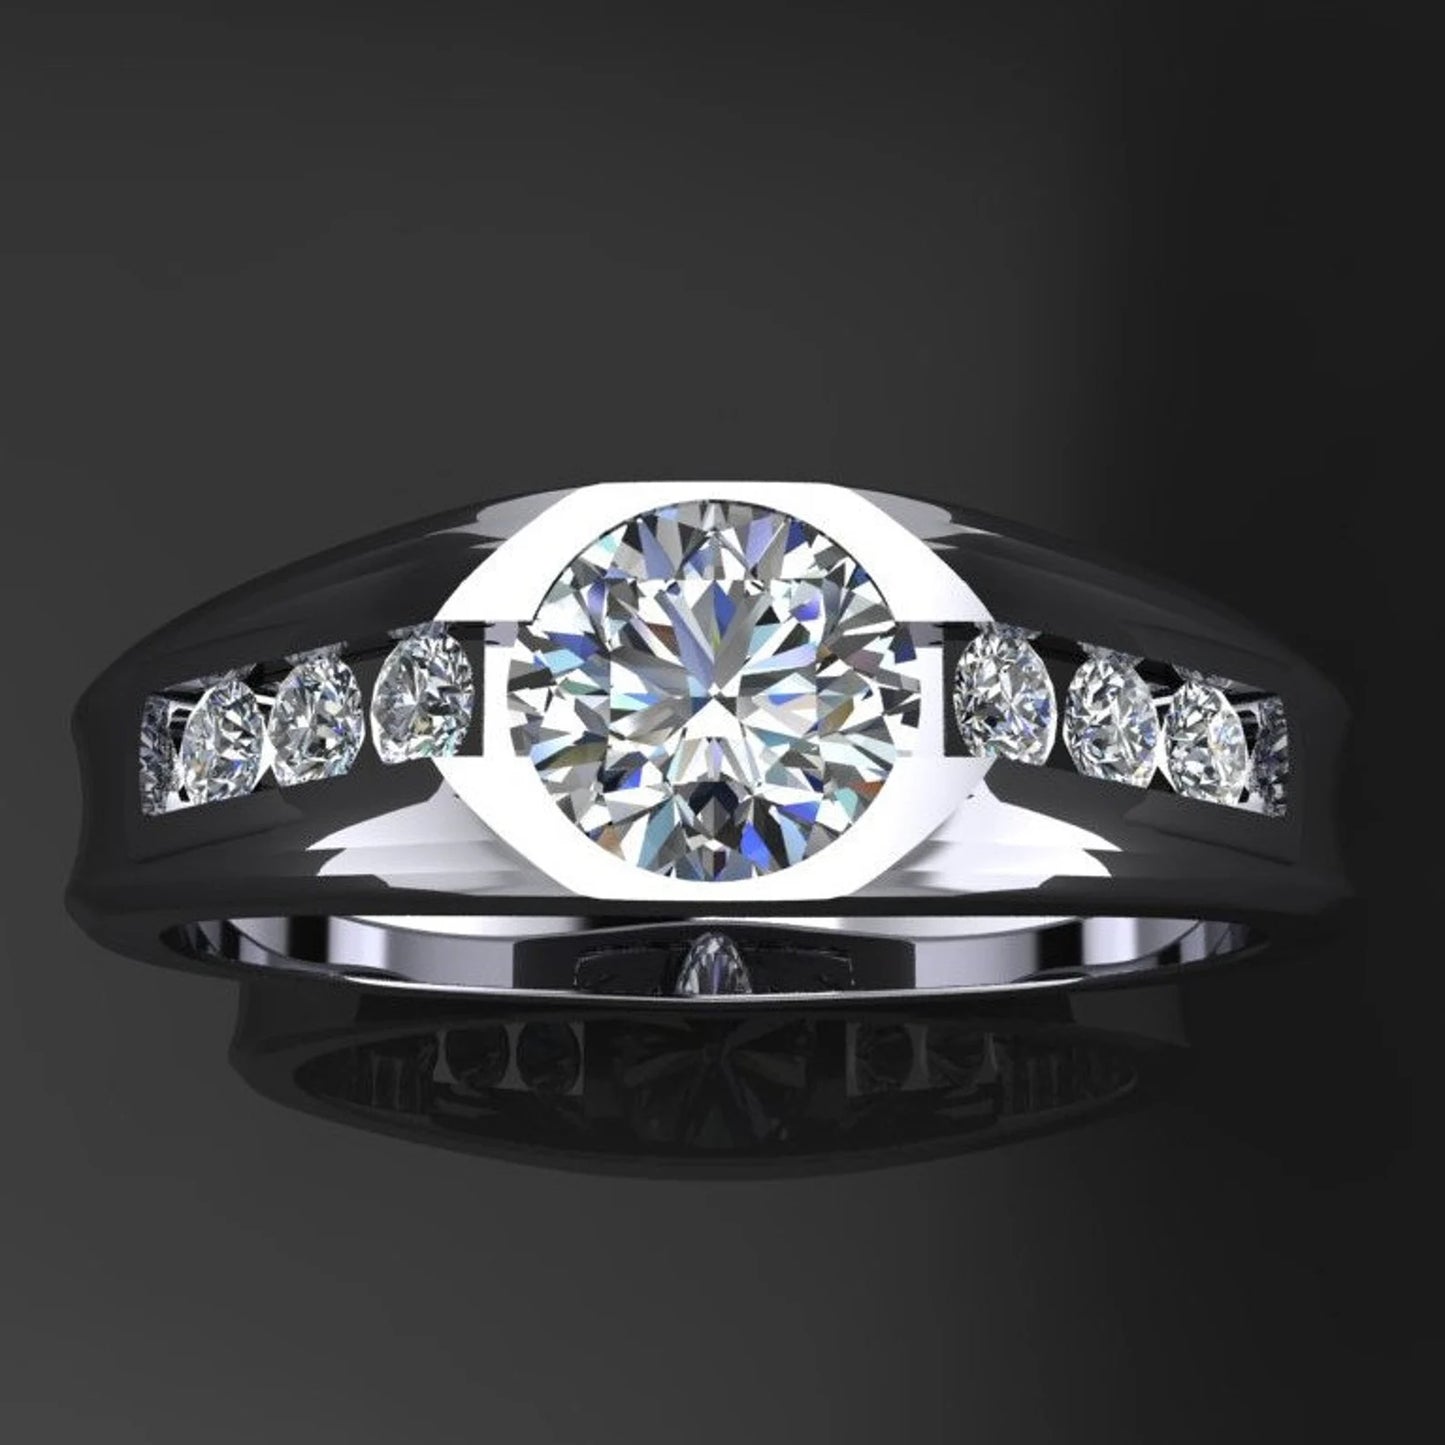 devon ring - men's gold wedding band, moissanite engagement ring - J Hollywood Designs